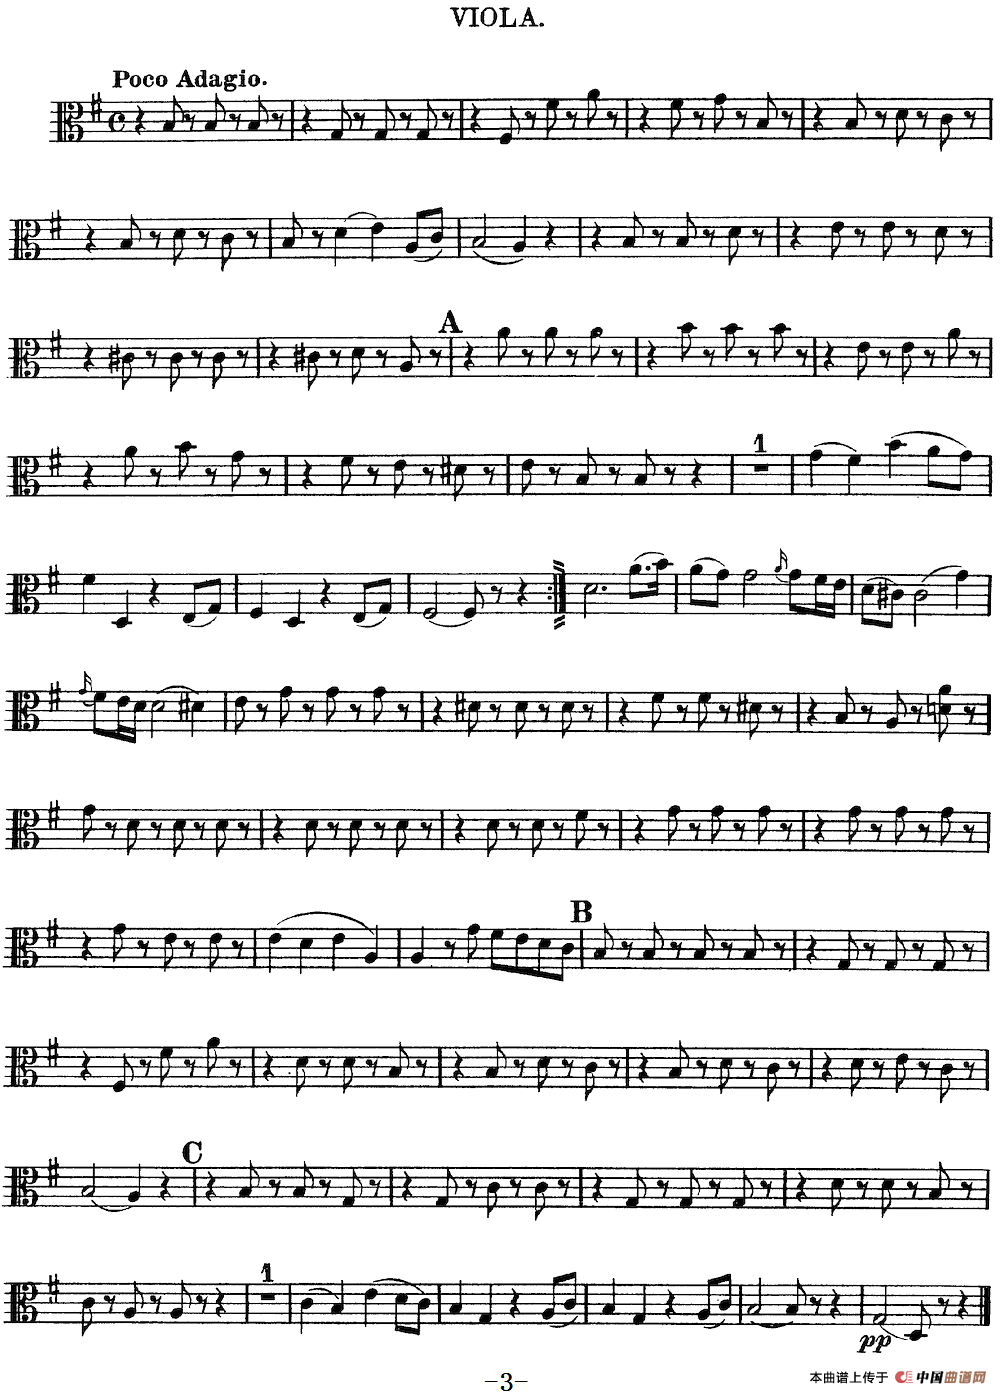 Mozart《Quartet No.10 in C Major,K.170》（Viola分谱）